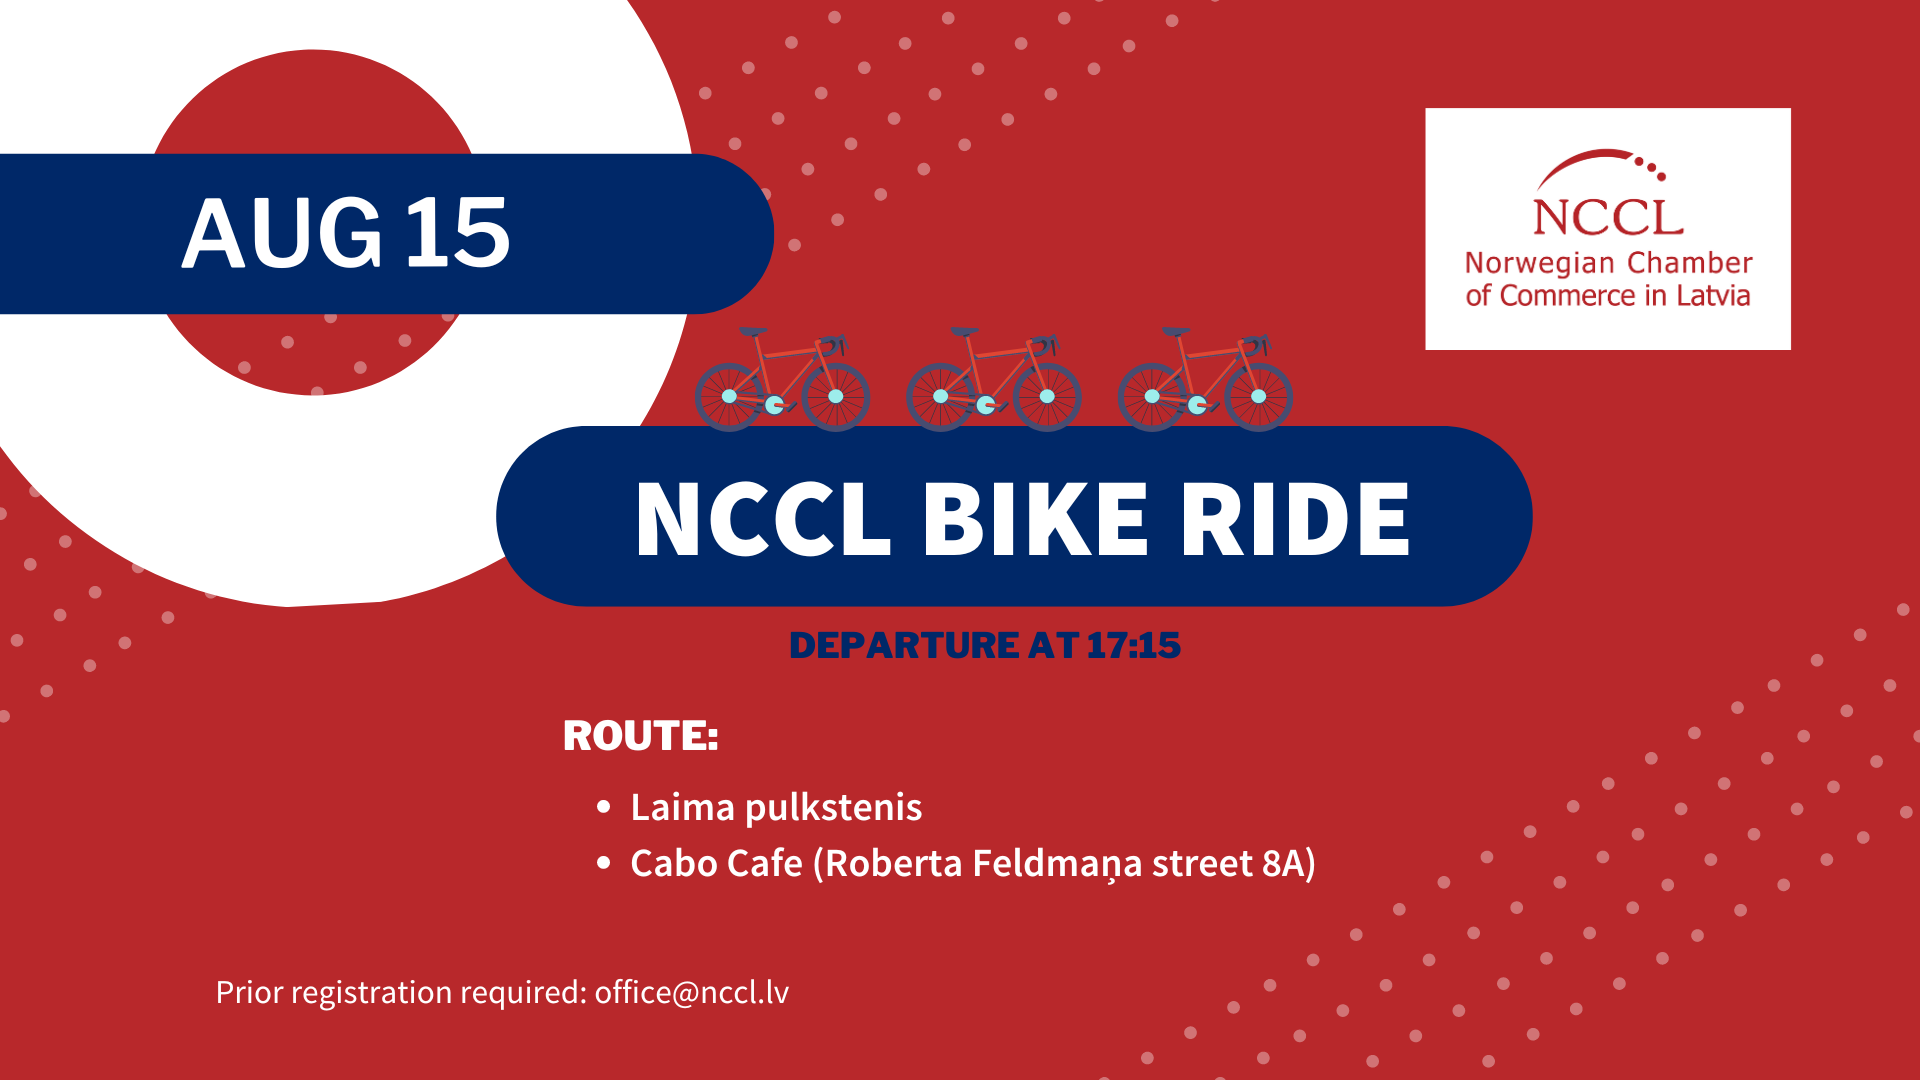 NCCL Bike Ride